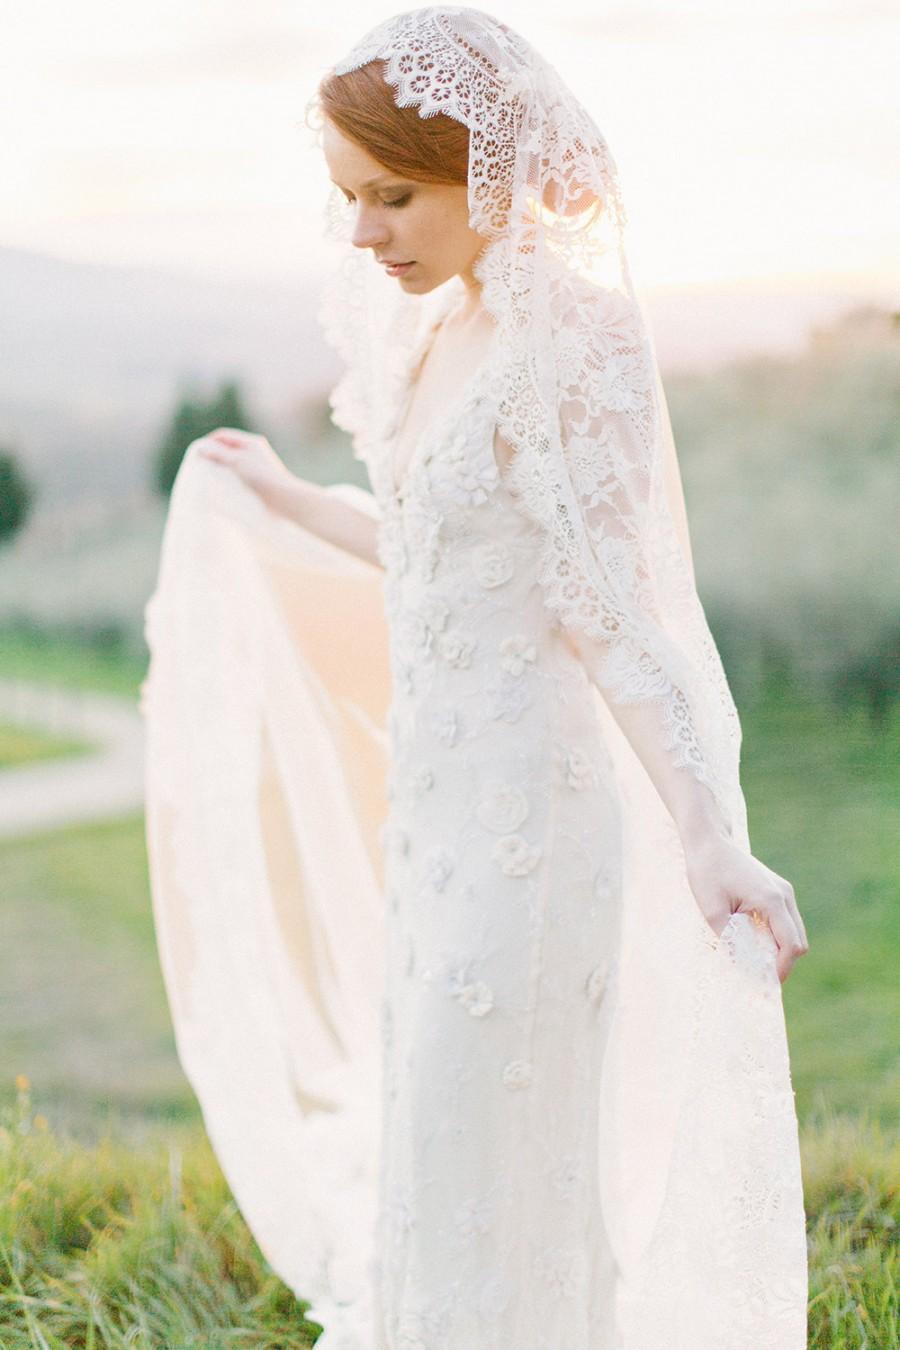 Wedding - Wedding Veil, Lace Bridal Mantilla veil, Ivory Cathedral length veil - Style 301